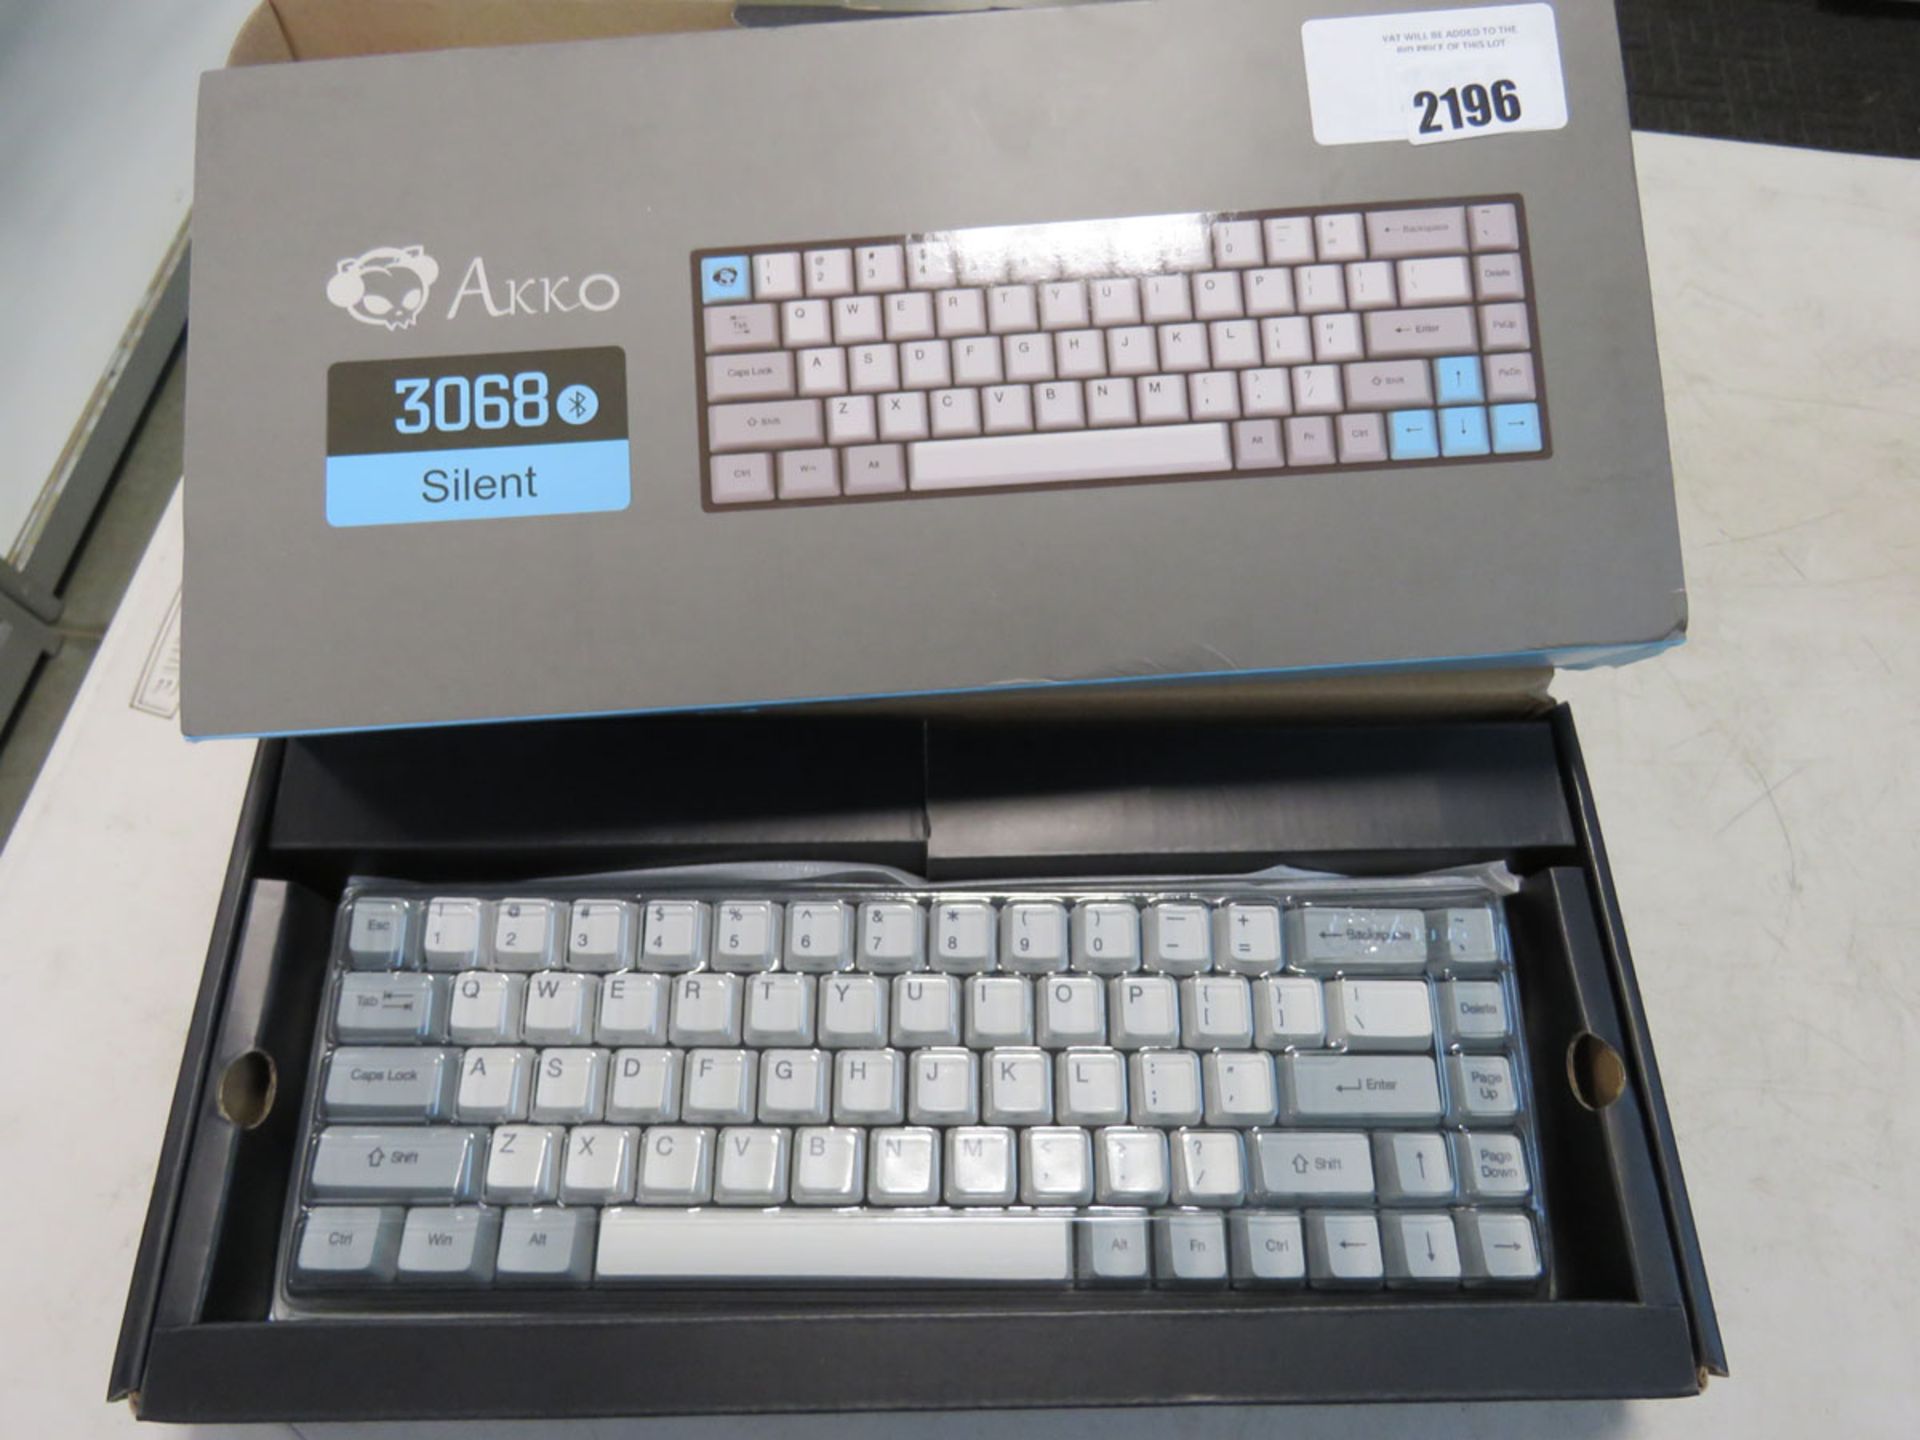 2255 - Akko 3068 silent bluetooth keyboard with box